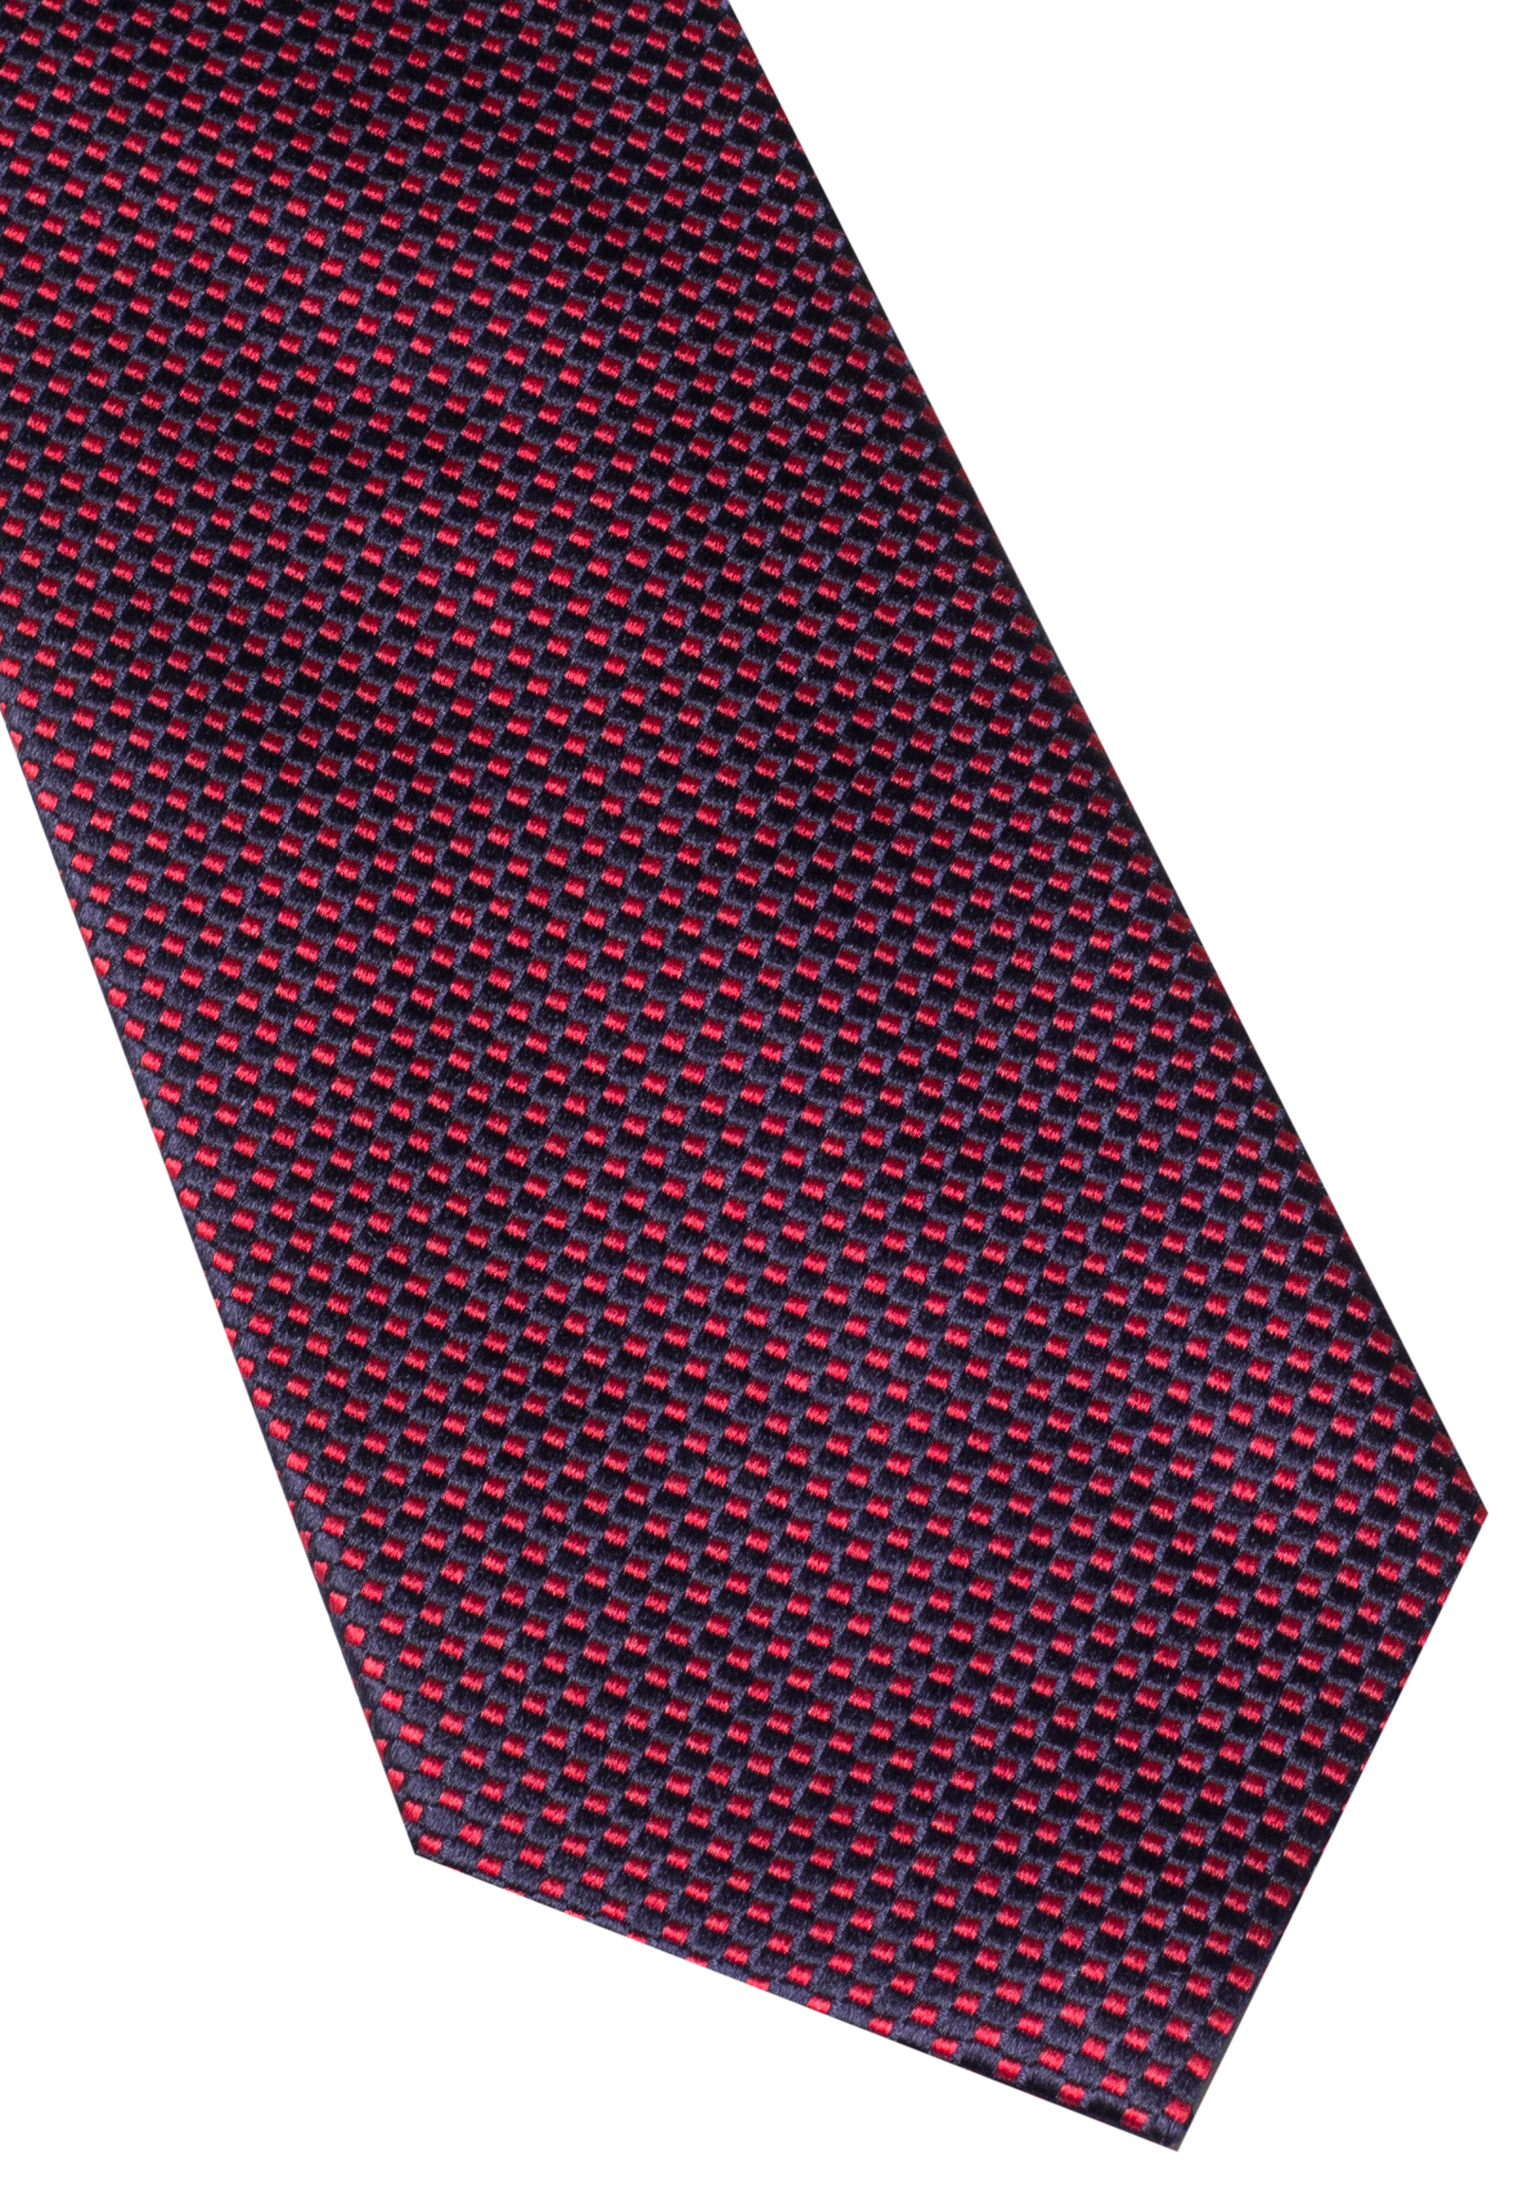 Krawatte | navy/rot in | strukturiert 142 navy/rot 1AC00534-81-89-142 |